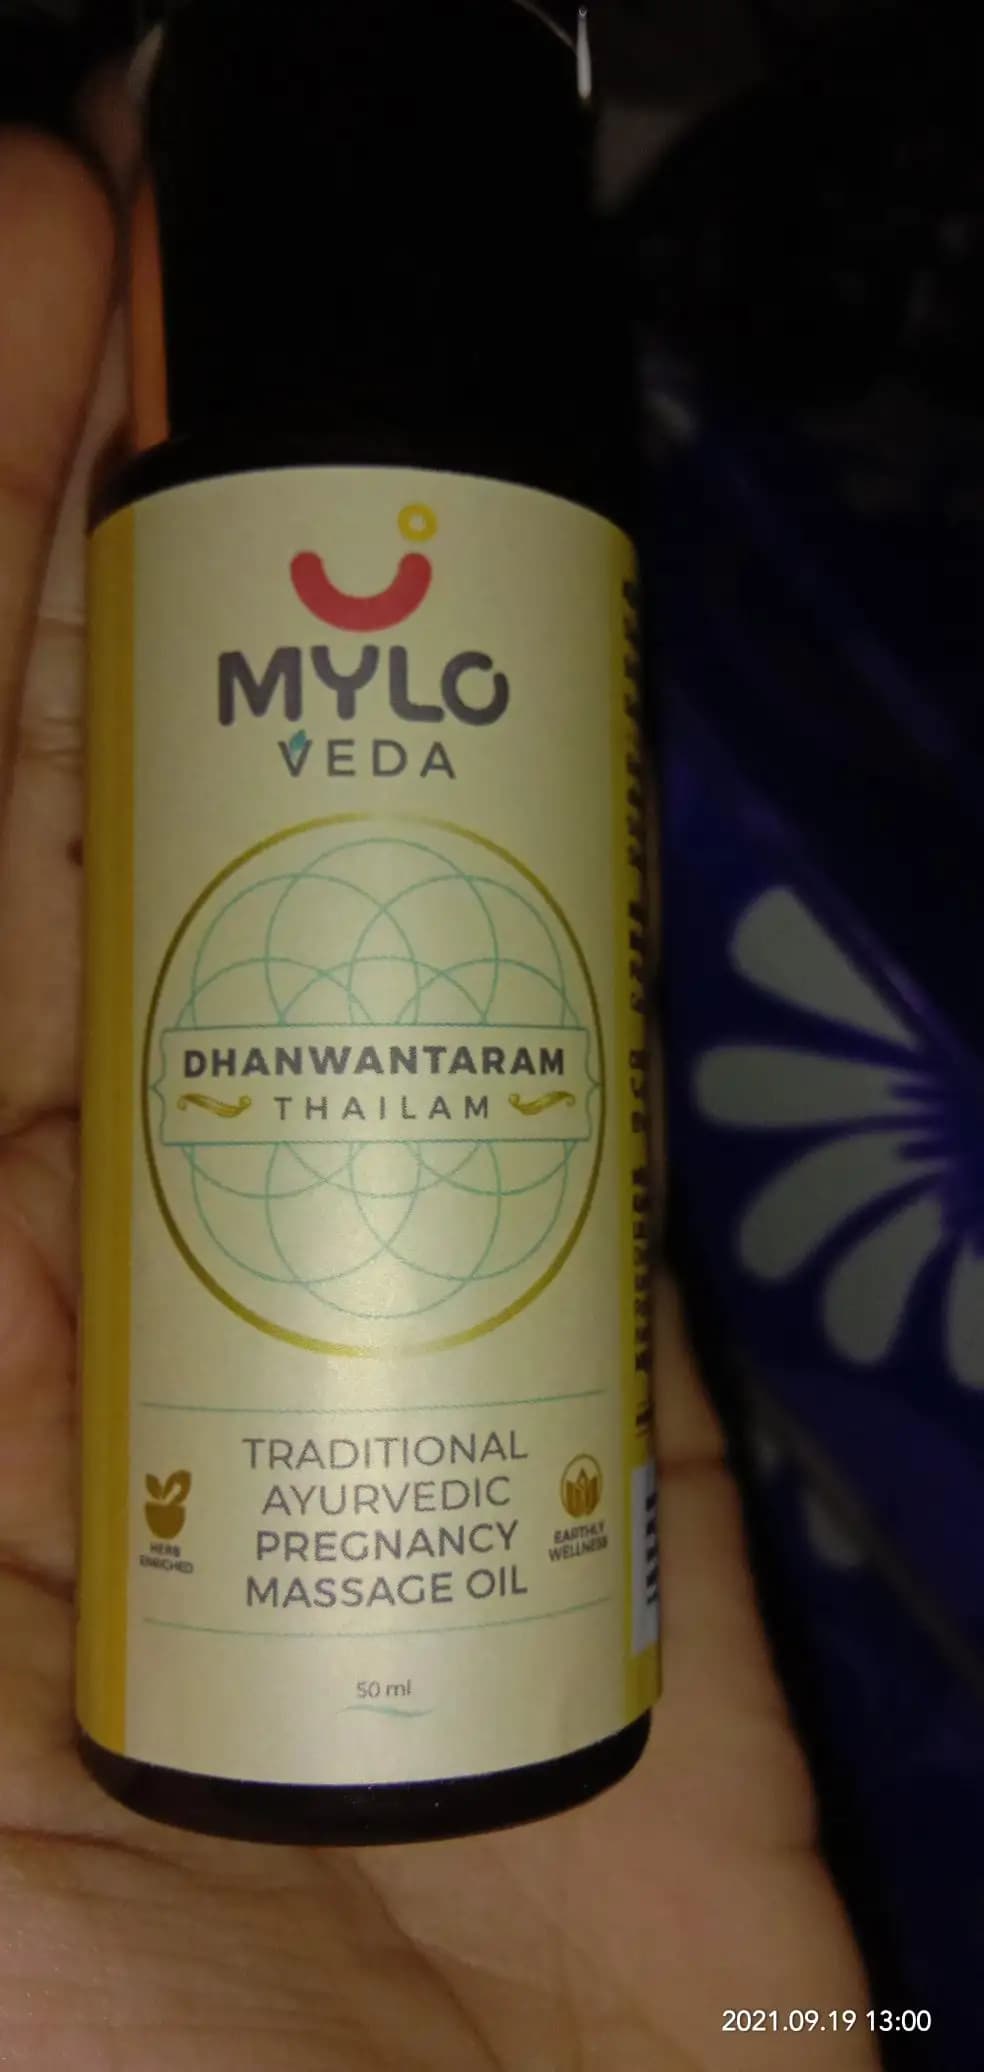 Ayurvedic Pregnancy Massage Oil - Dhanwantaram Thailam (200 ml)